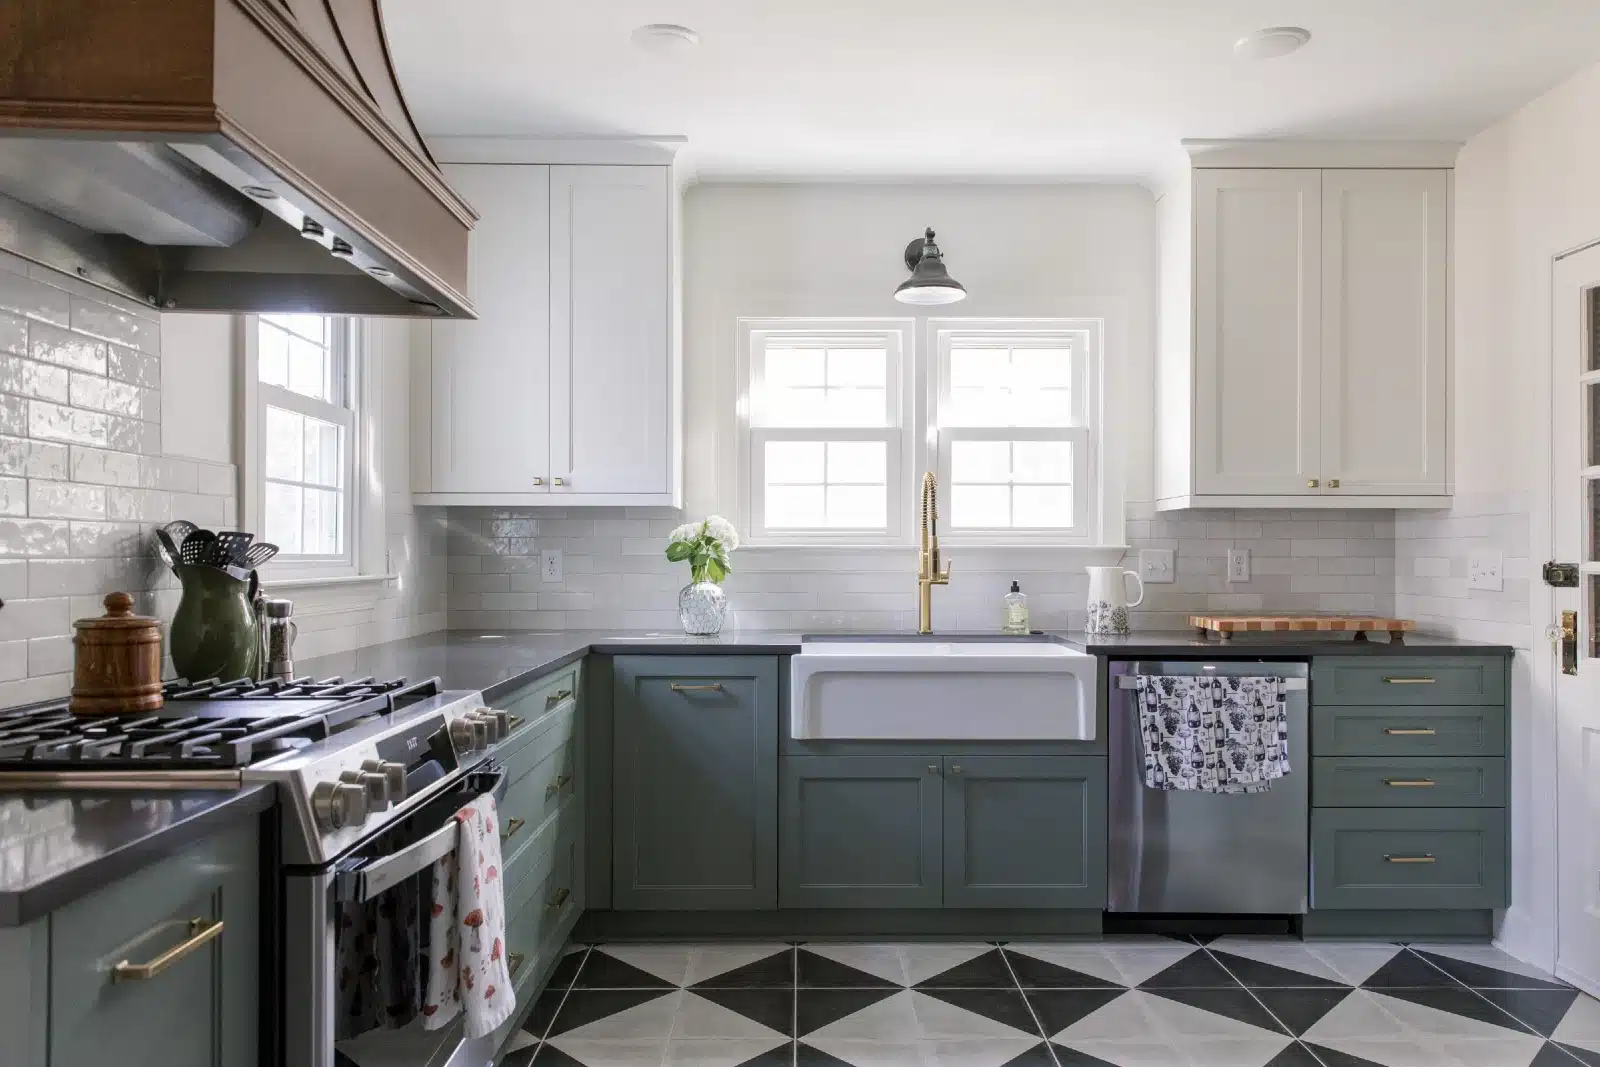 Kitchen Update After - Green cabinets, checkerboard floor tile and white backsplash